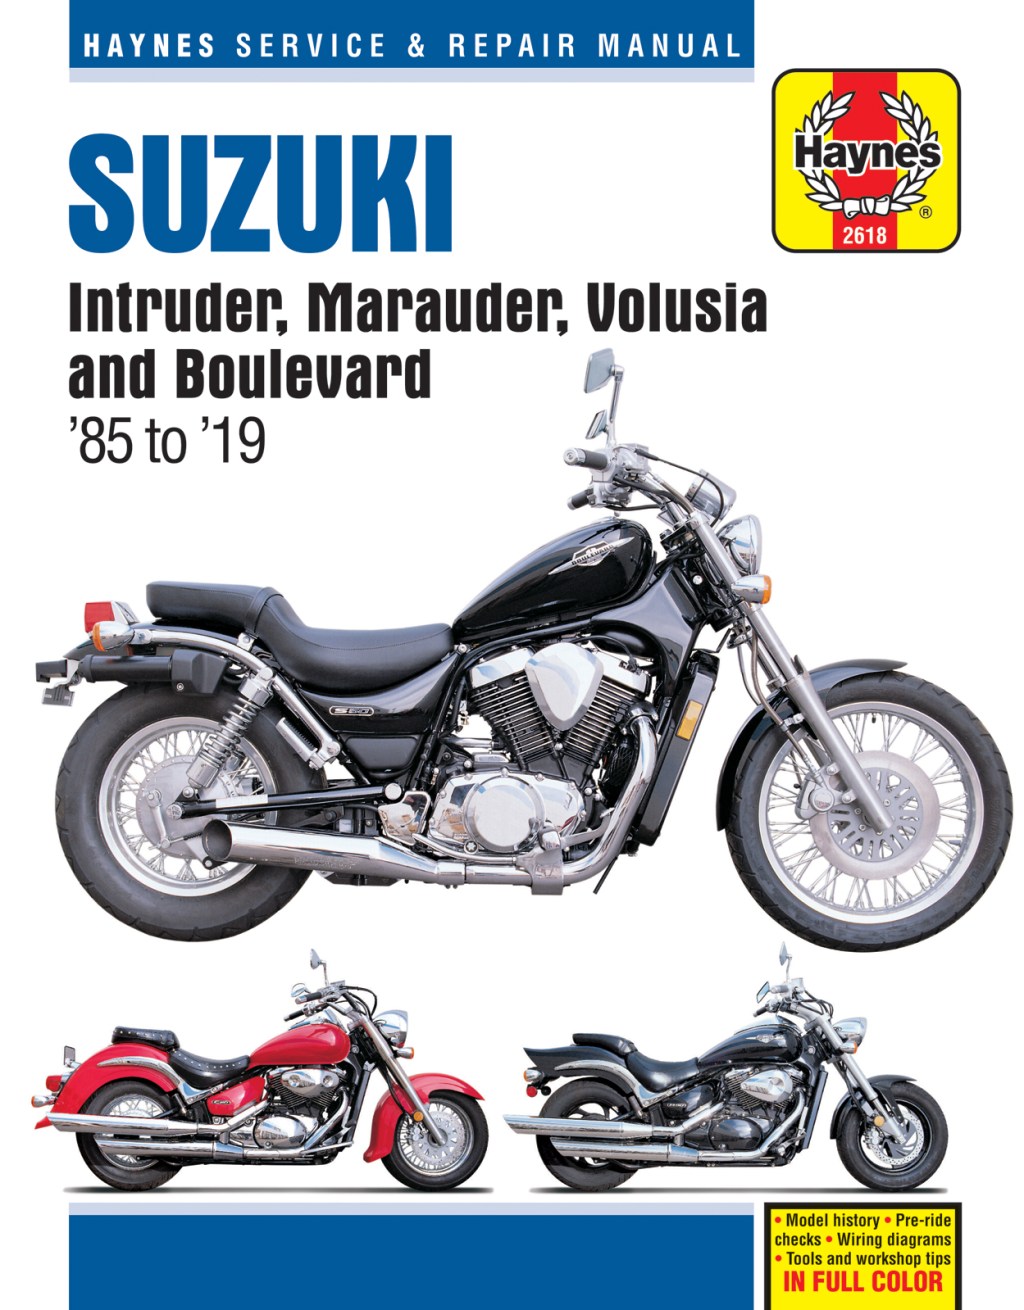 06 suzuki boulevard m50 manual - Suzuki Boulevard M  -  Haynes Repair Manuals & Guides